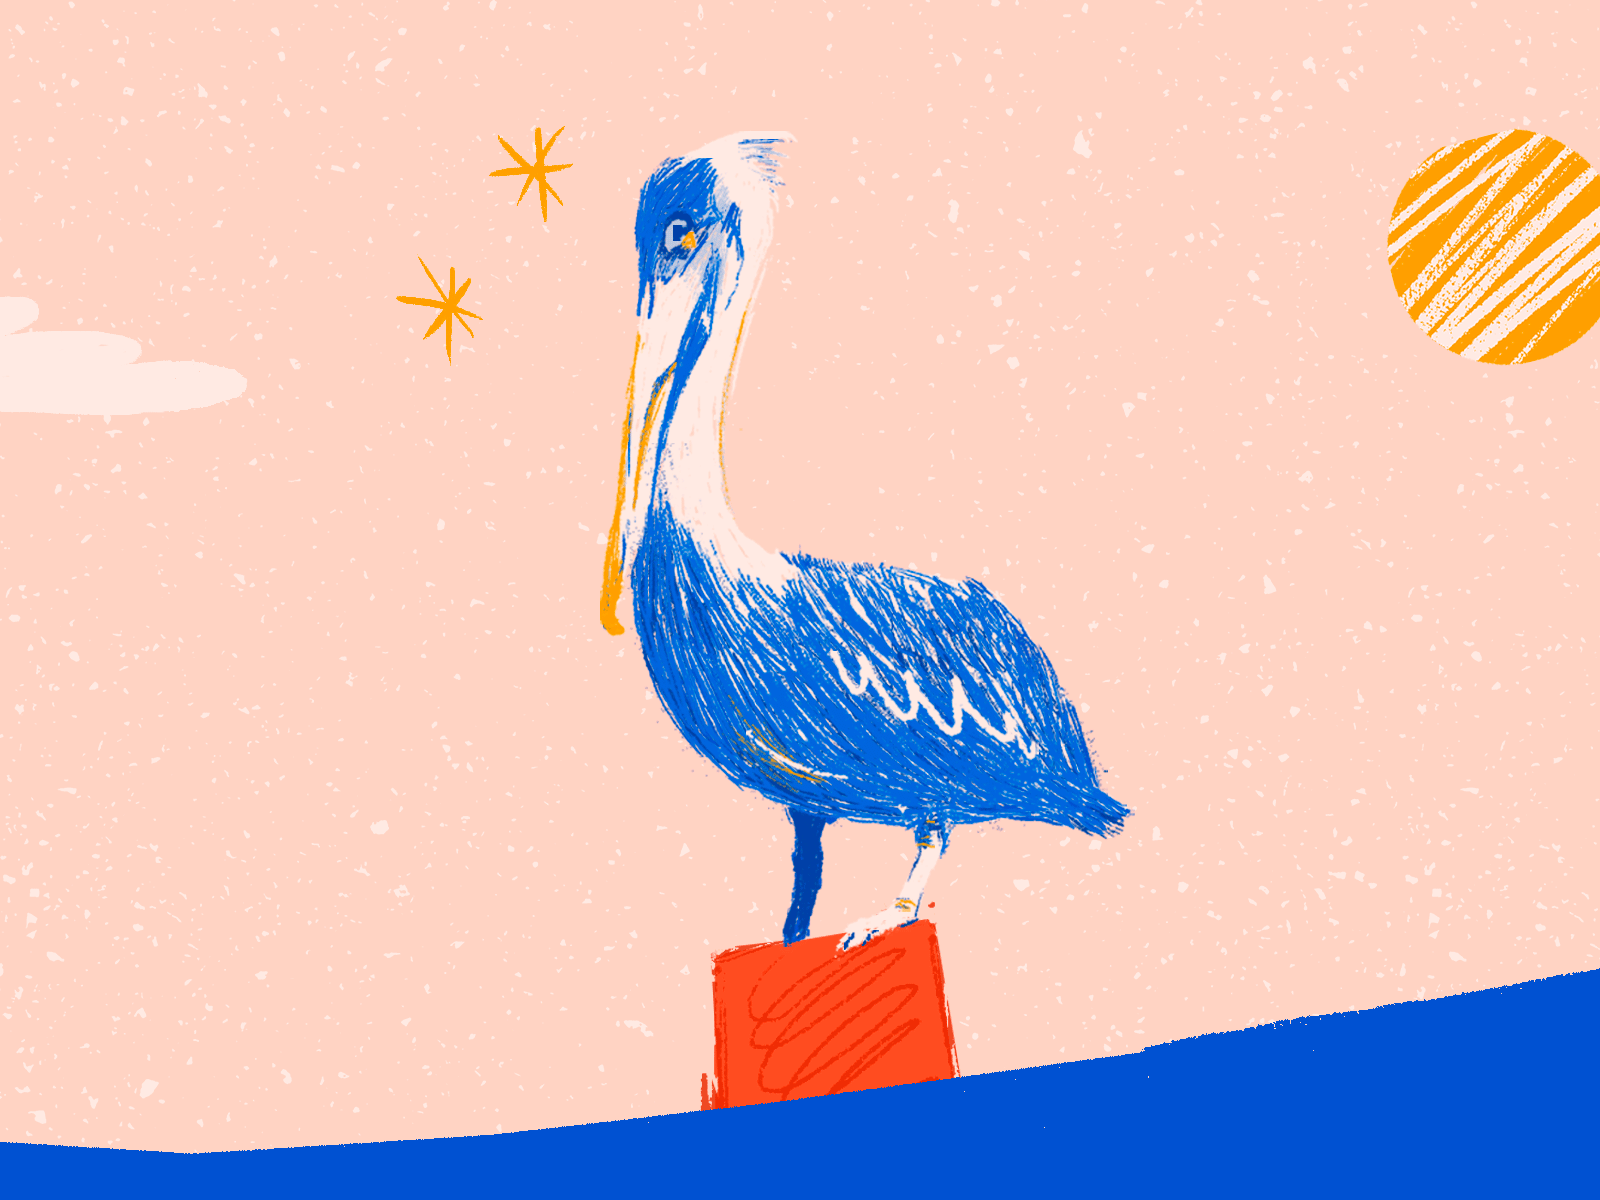 Pelicano in a bucket animal illustration animation beach bright color bucket caribbean illustration ocean ocean animals ocean creatures pelican pelicano texture illustration textures venezuela